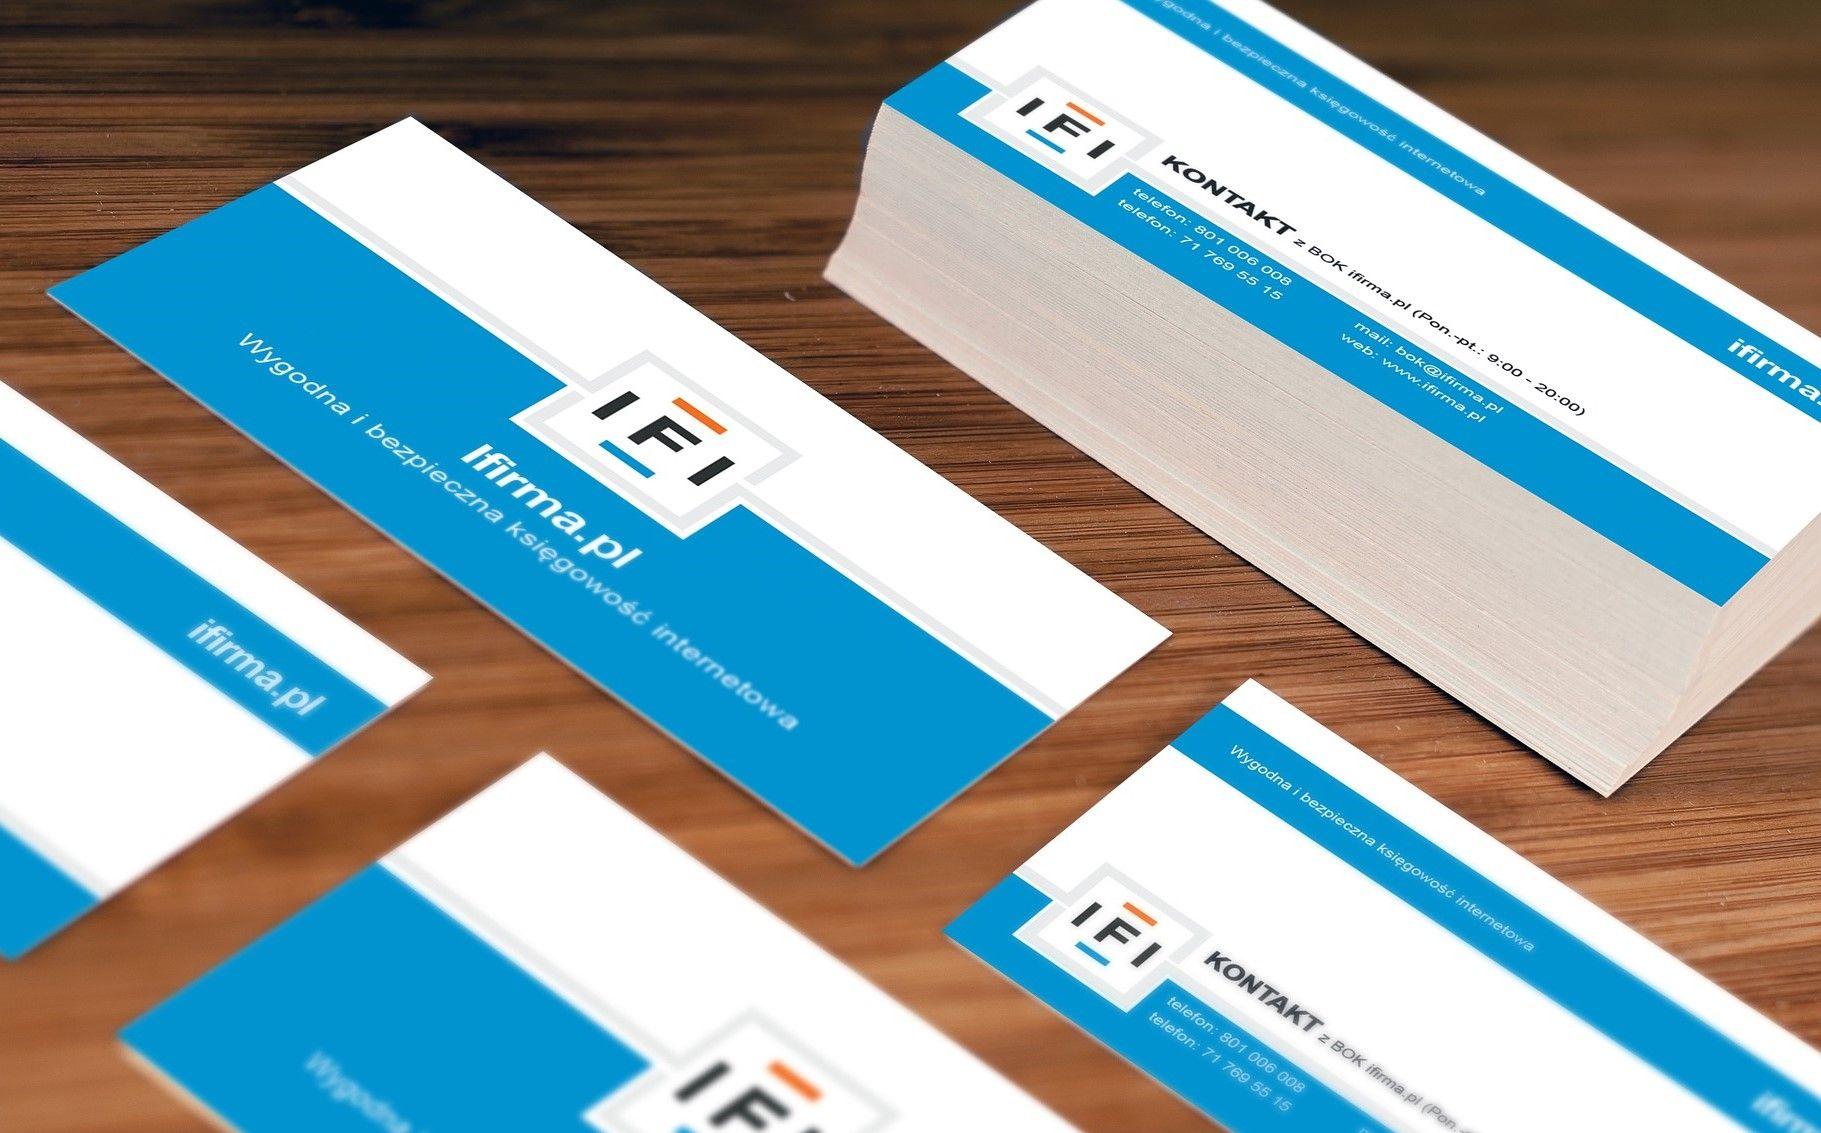 LinkedIn for Business Cards Logo - Famous Find Business Cards Adornment Card Ideas Etadam Info Momo ...